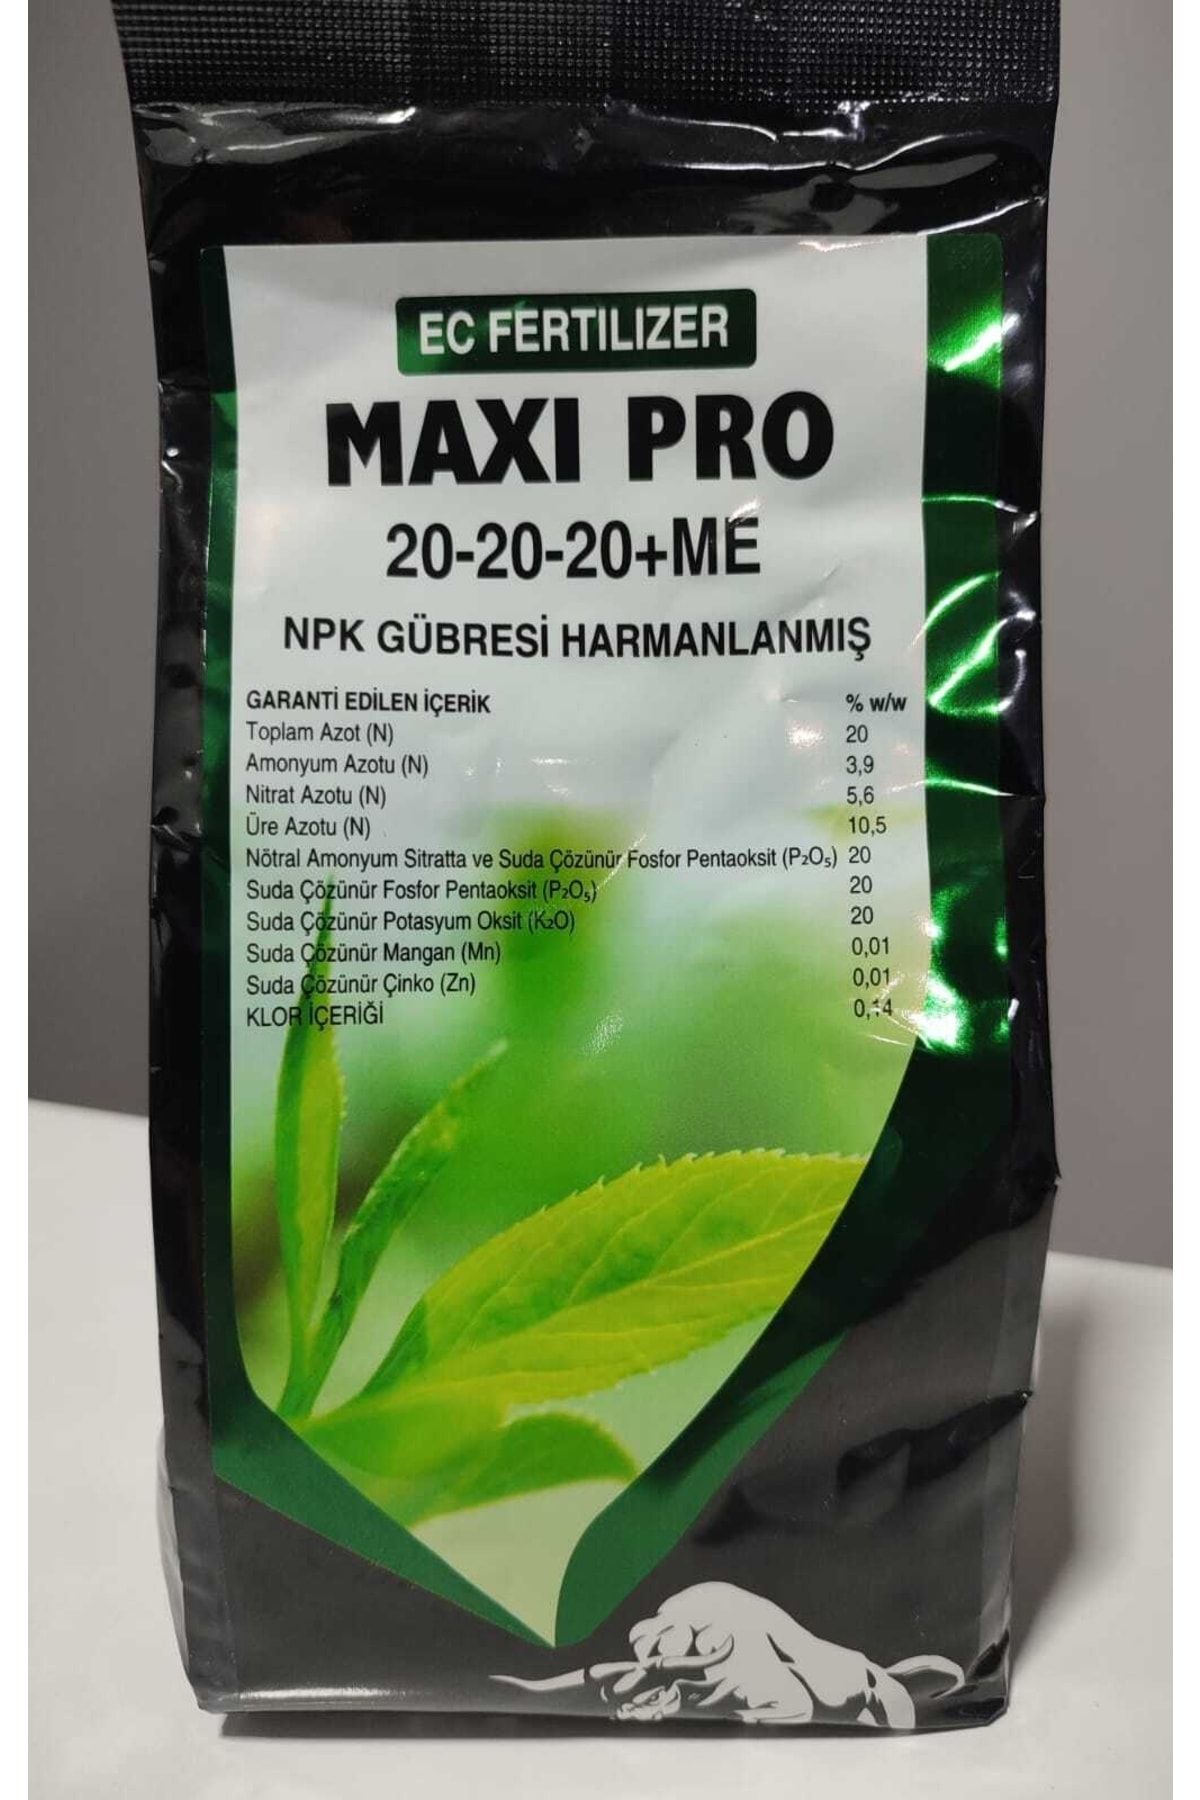 AGT Maxi Pro 20-20-20+me 1kg